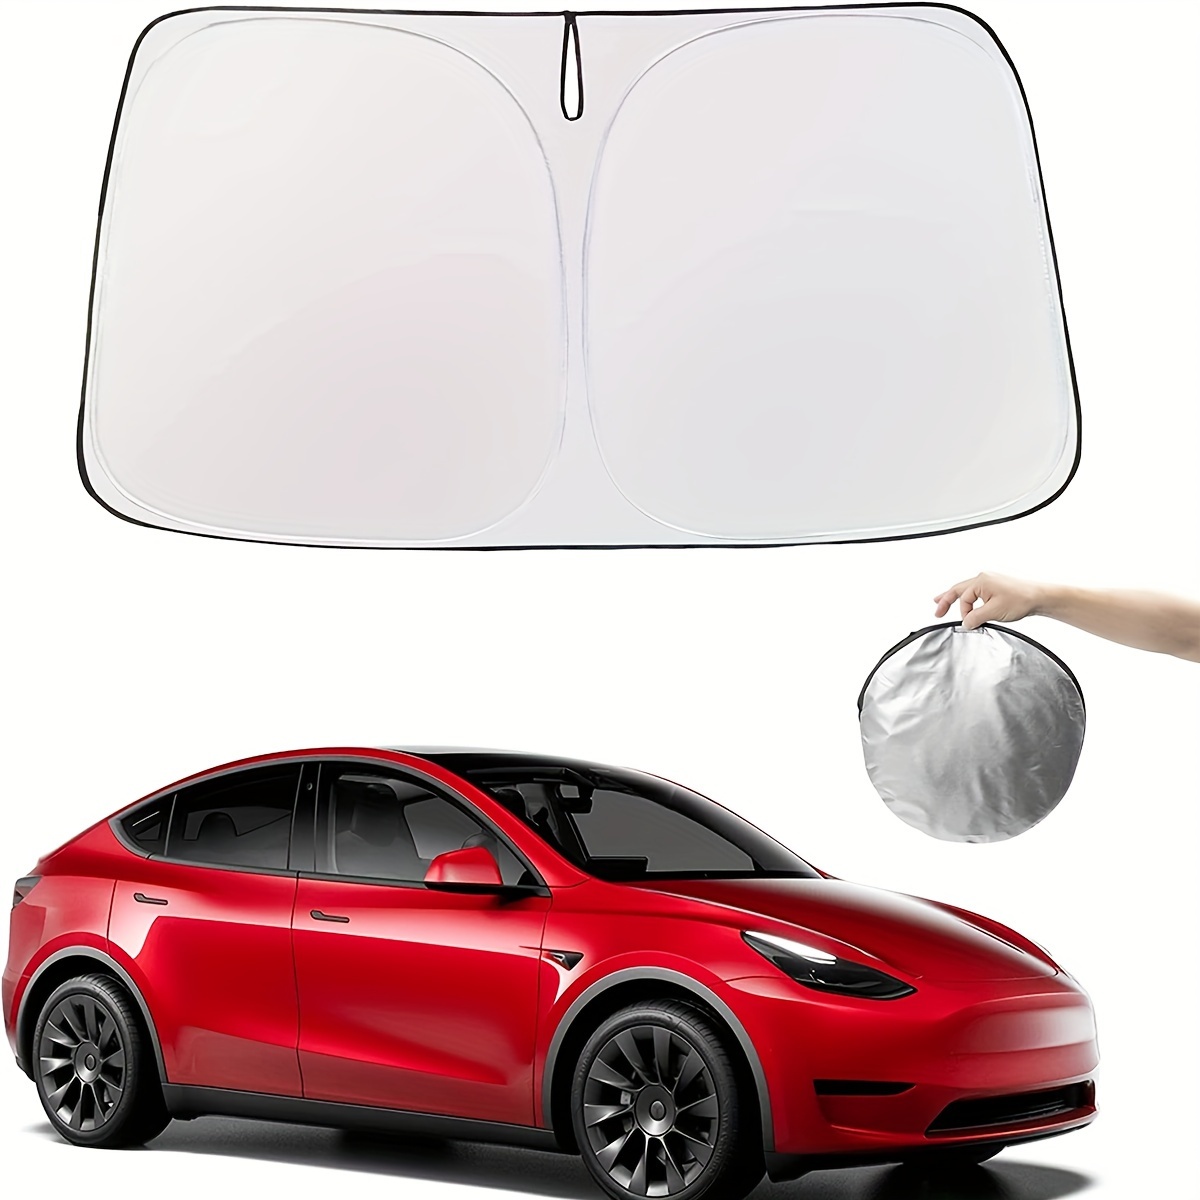 Side window sunshade for camping - Tesla Model Y